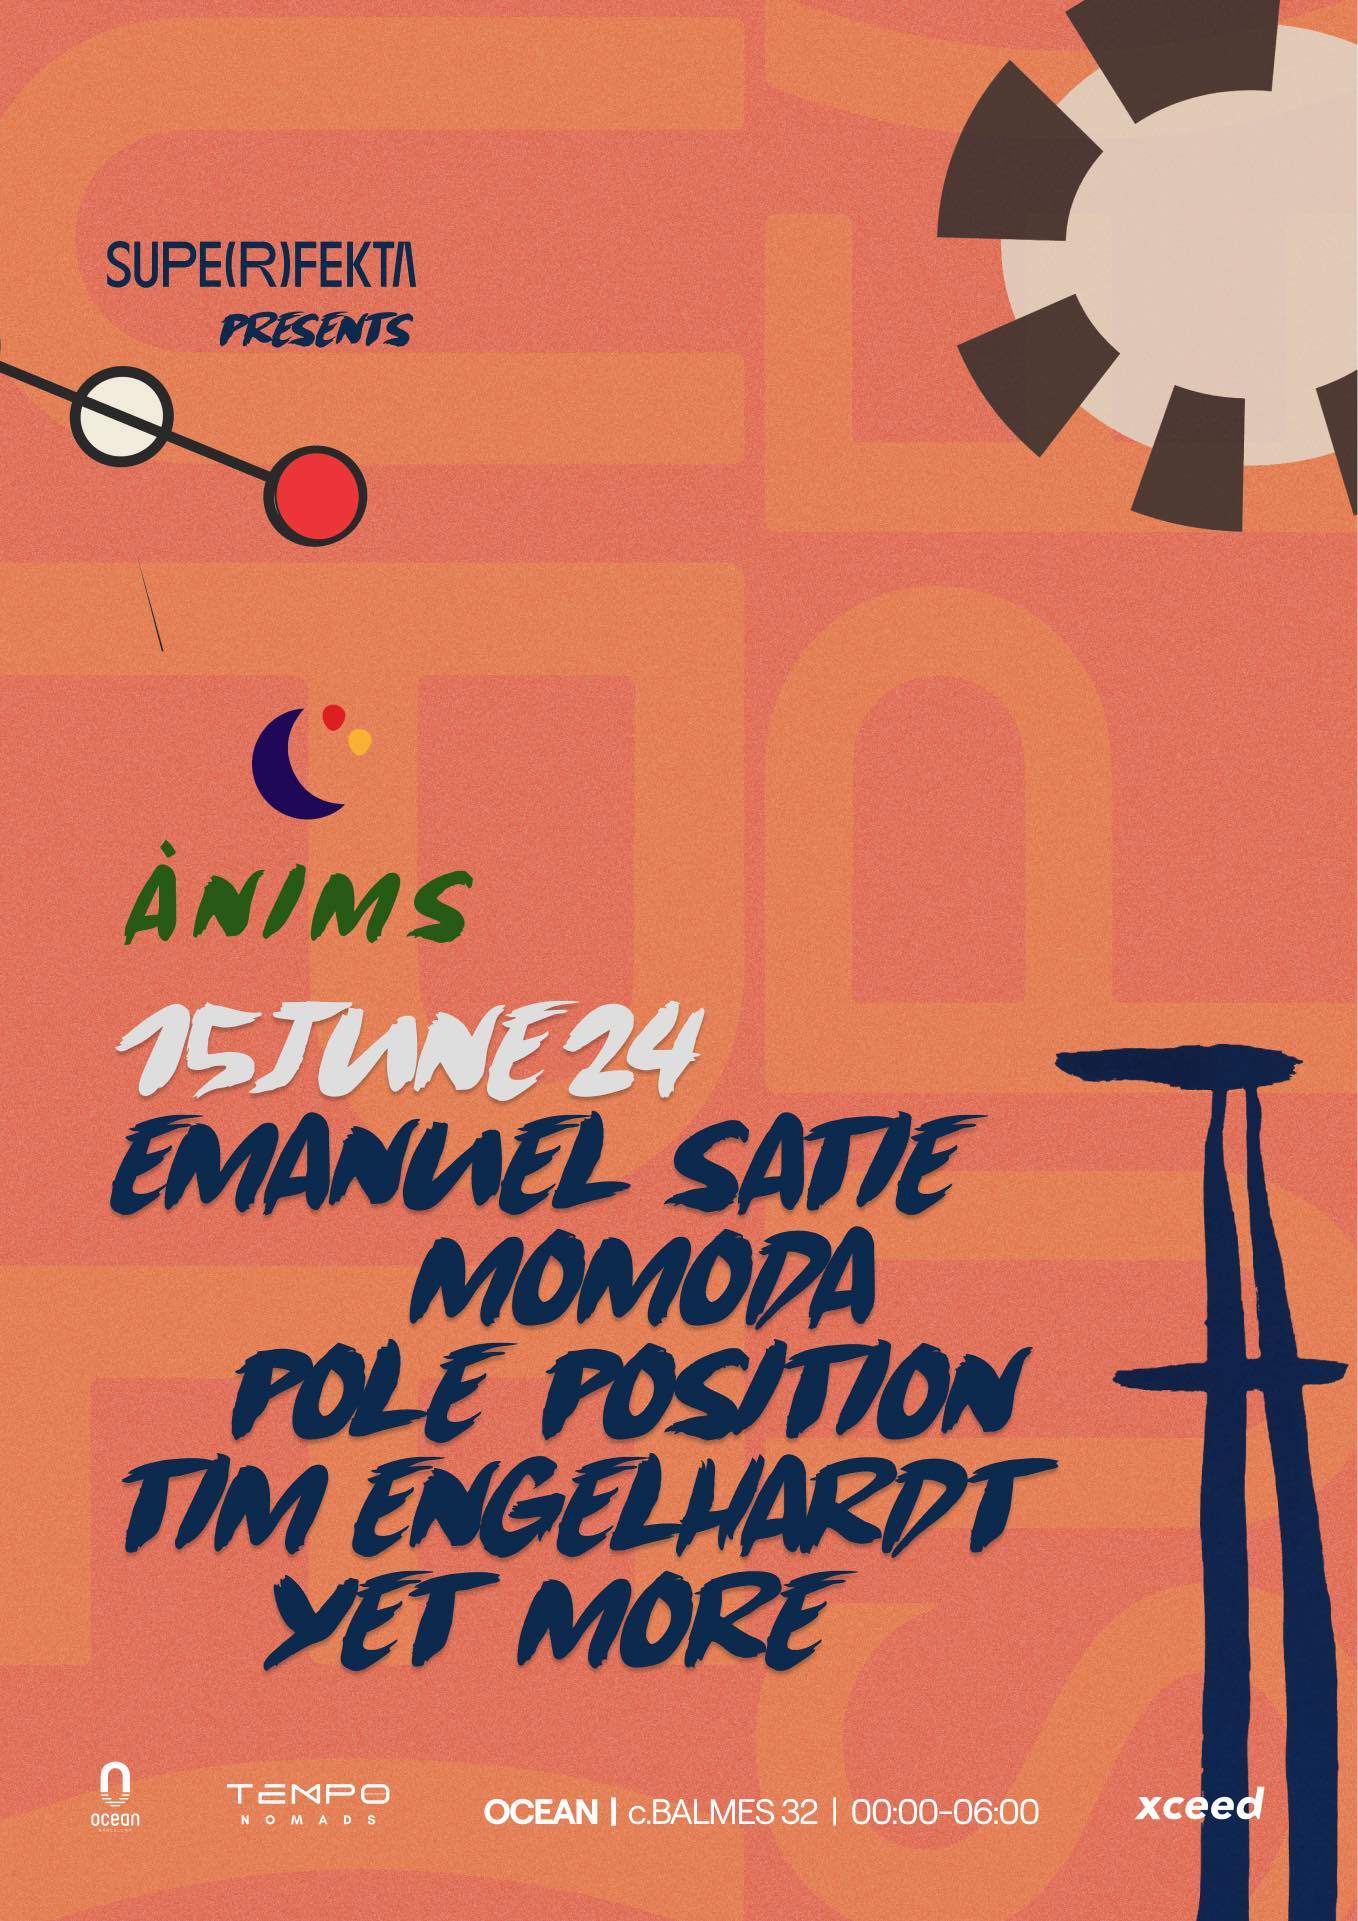 SUPERFEKTA peresents: Anims with Emanuel Satie, Tim Engelhardt, Yet More, Pole Position & Momoda - フライヤー表